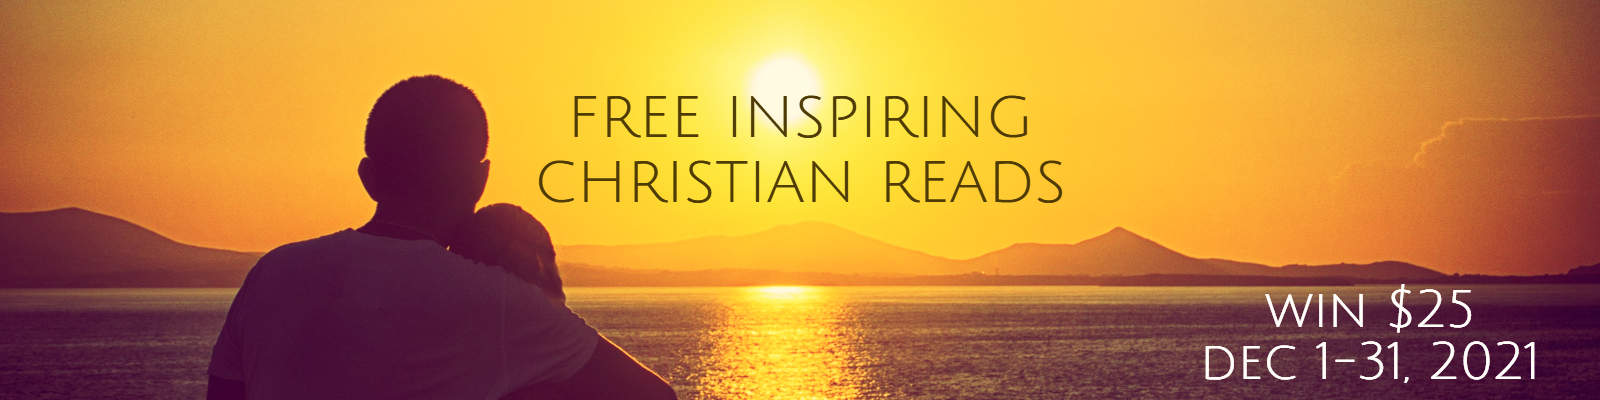 Inspiring Christian Reads banner